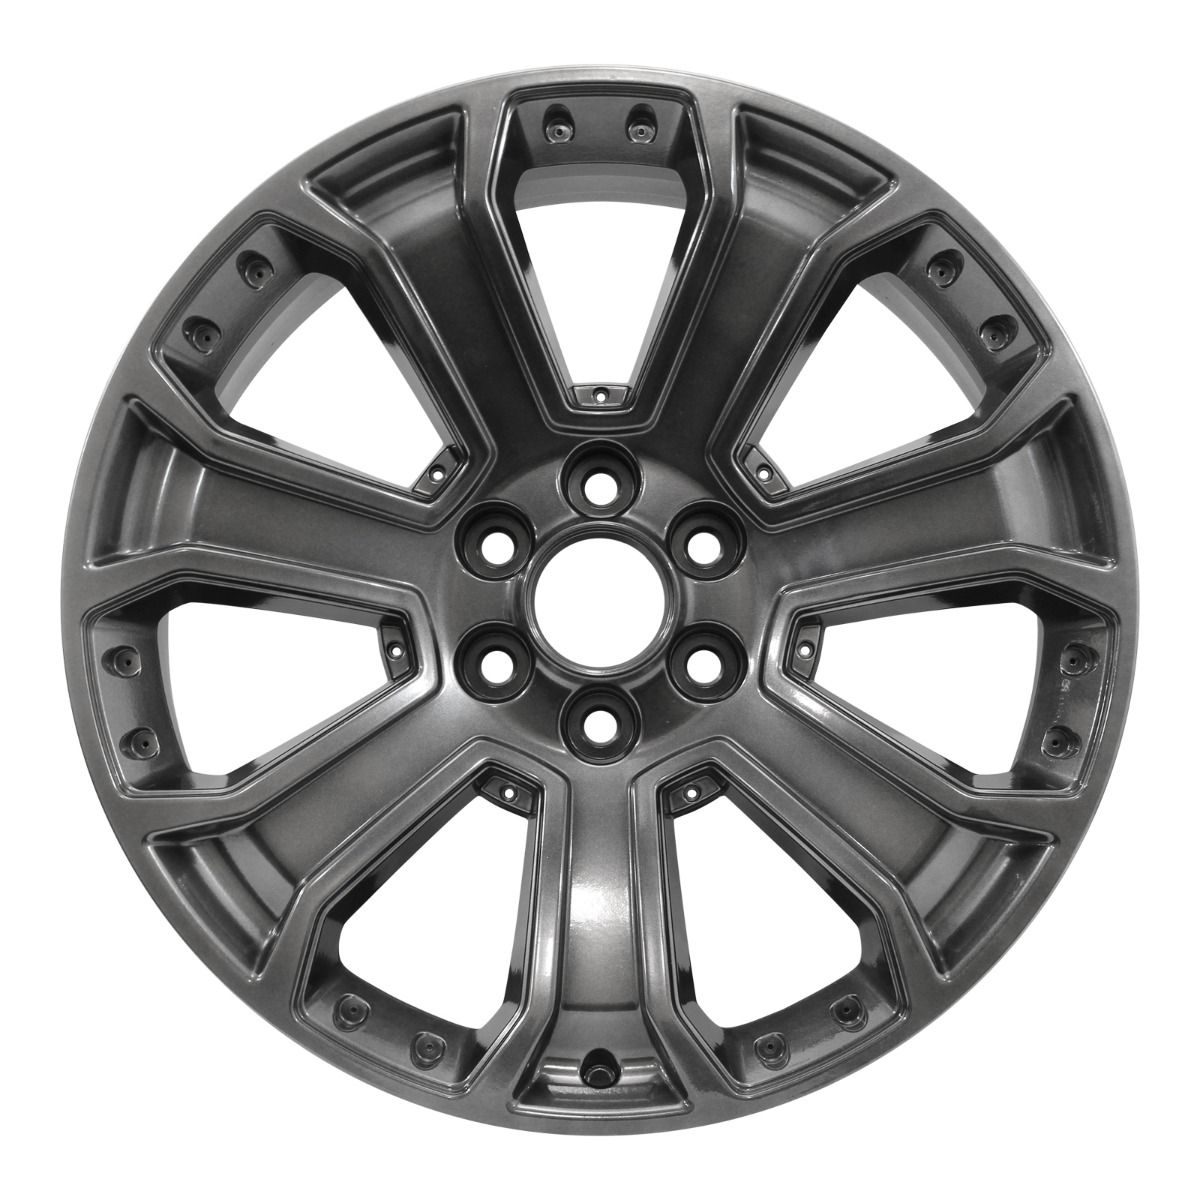 2014 Chevrolet Silverado 1500 22" OEM Wheel Rim W5660H